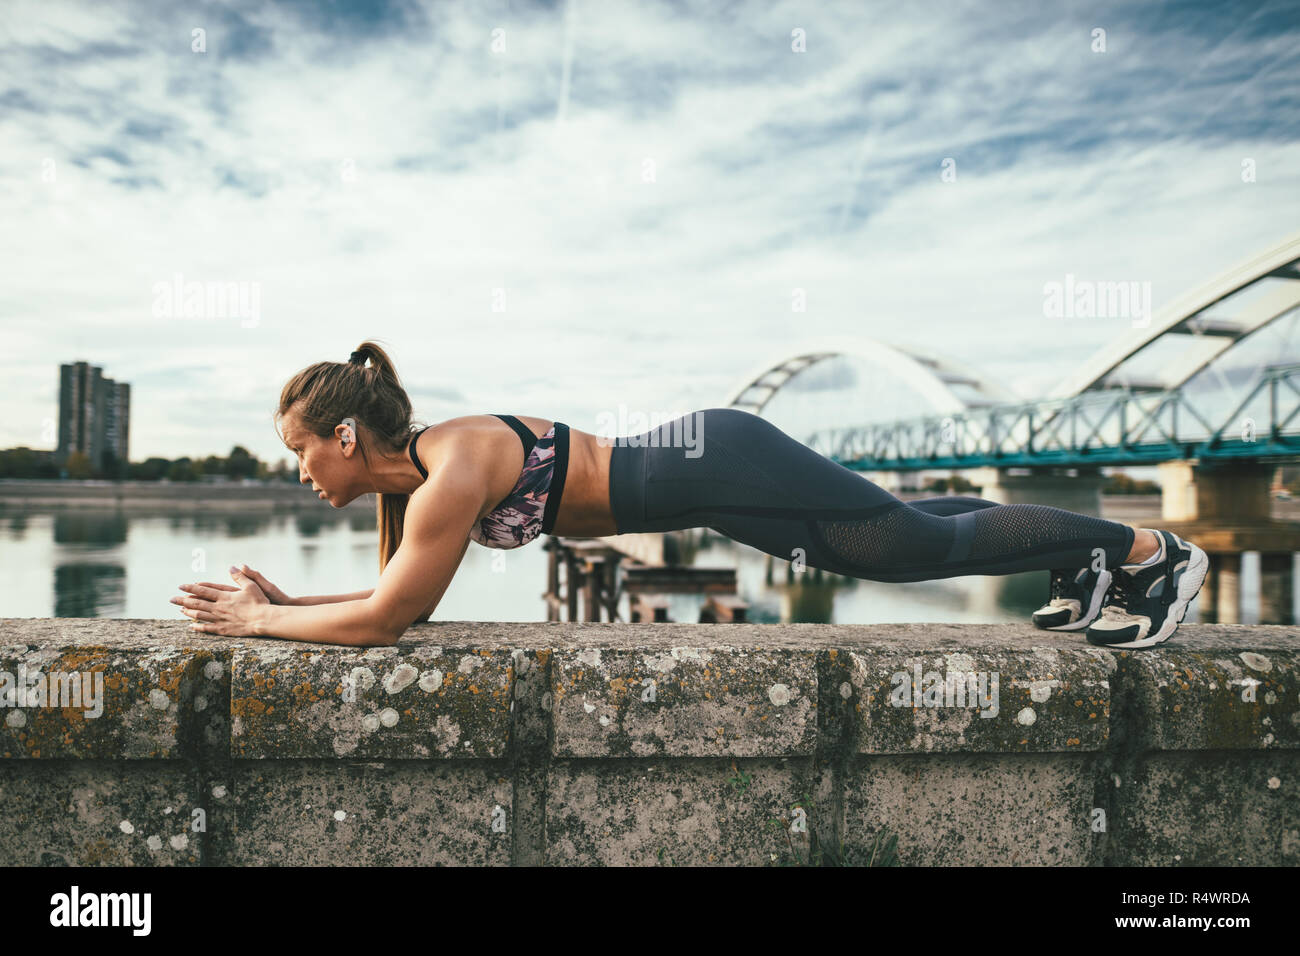 Young Sport Frau tun plank Übung auf der Wand während outdoor Cross Training durch den Fluss fokussiert. Stockfoto